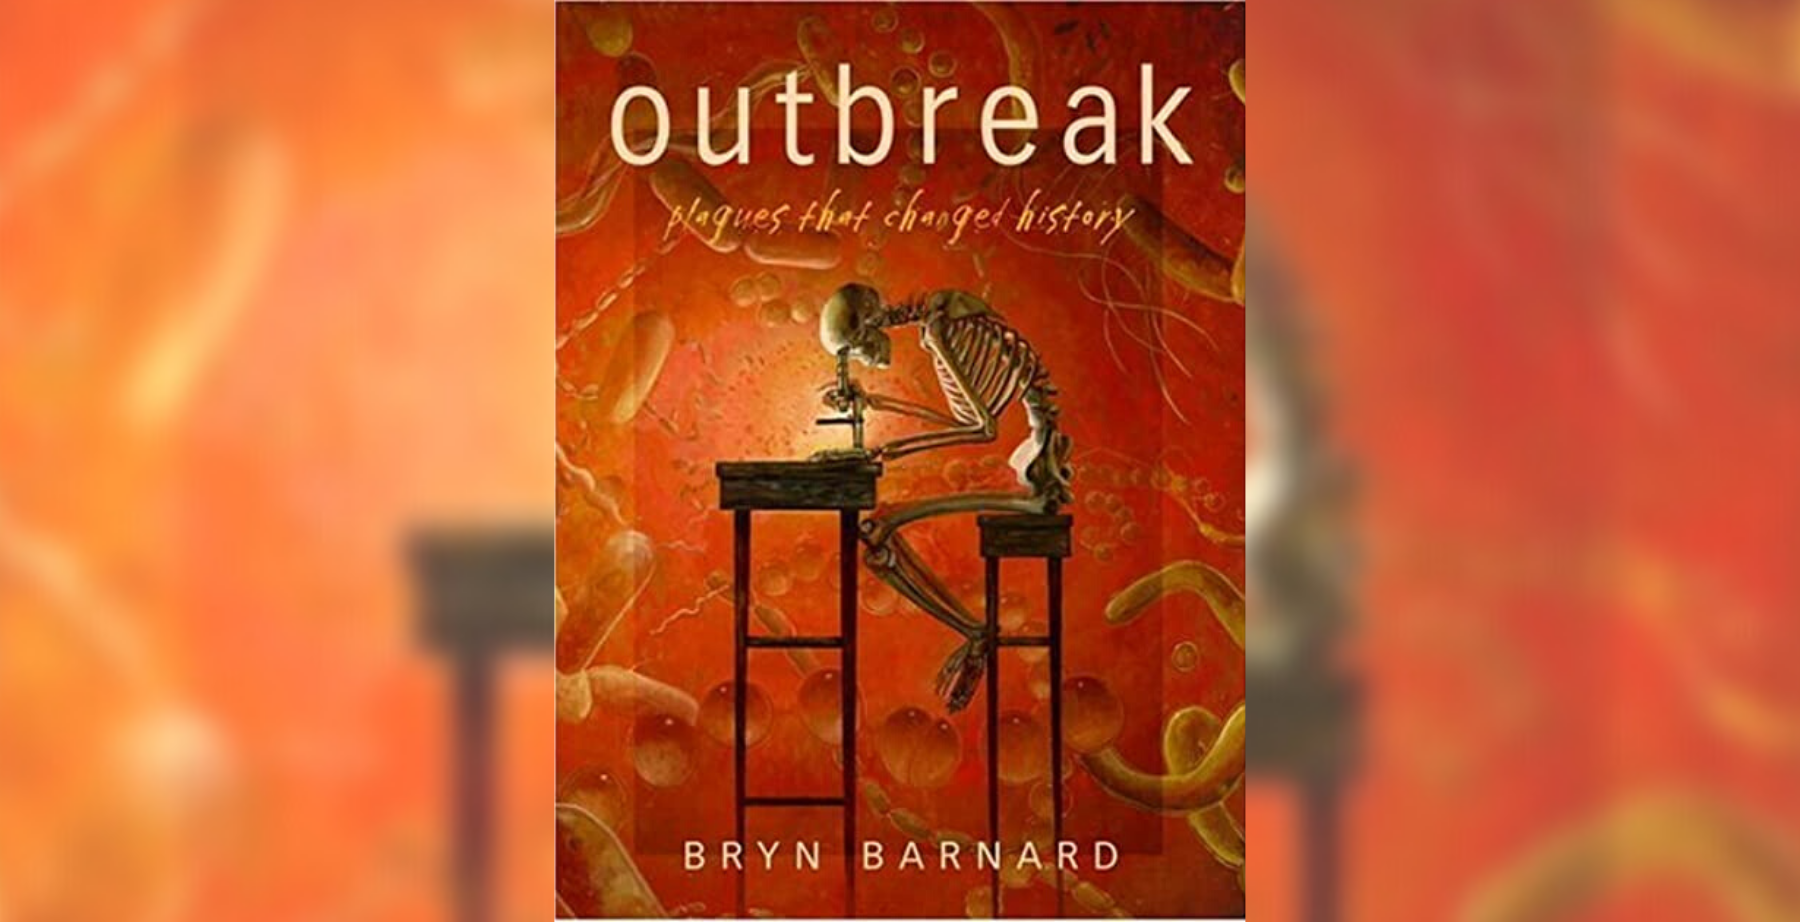 Outbreak book cover